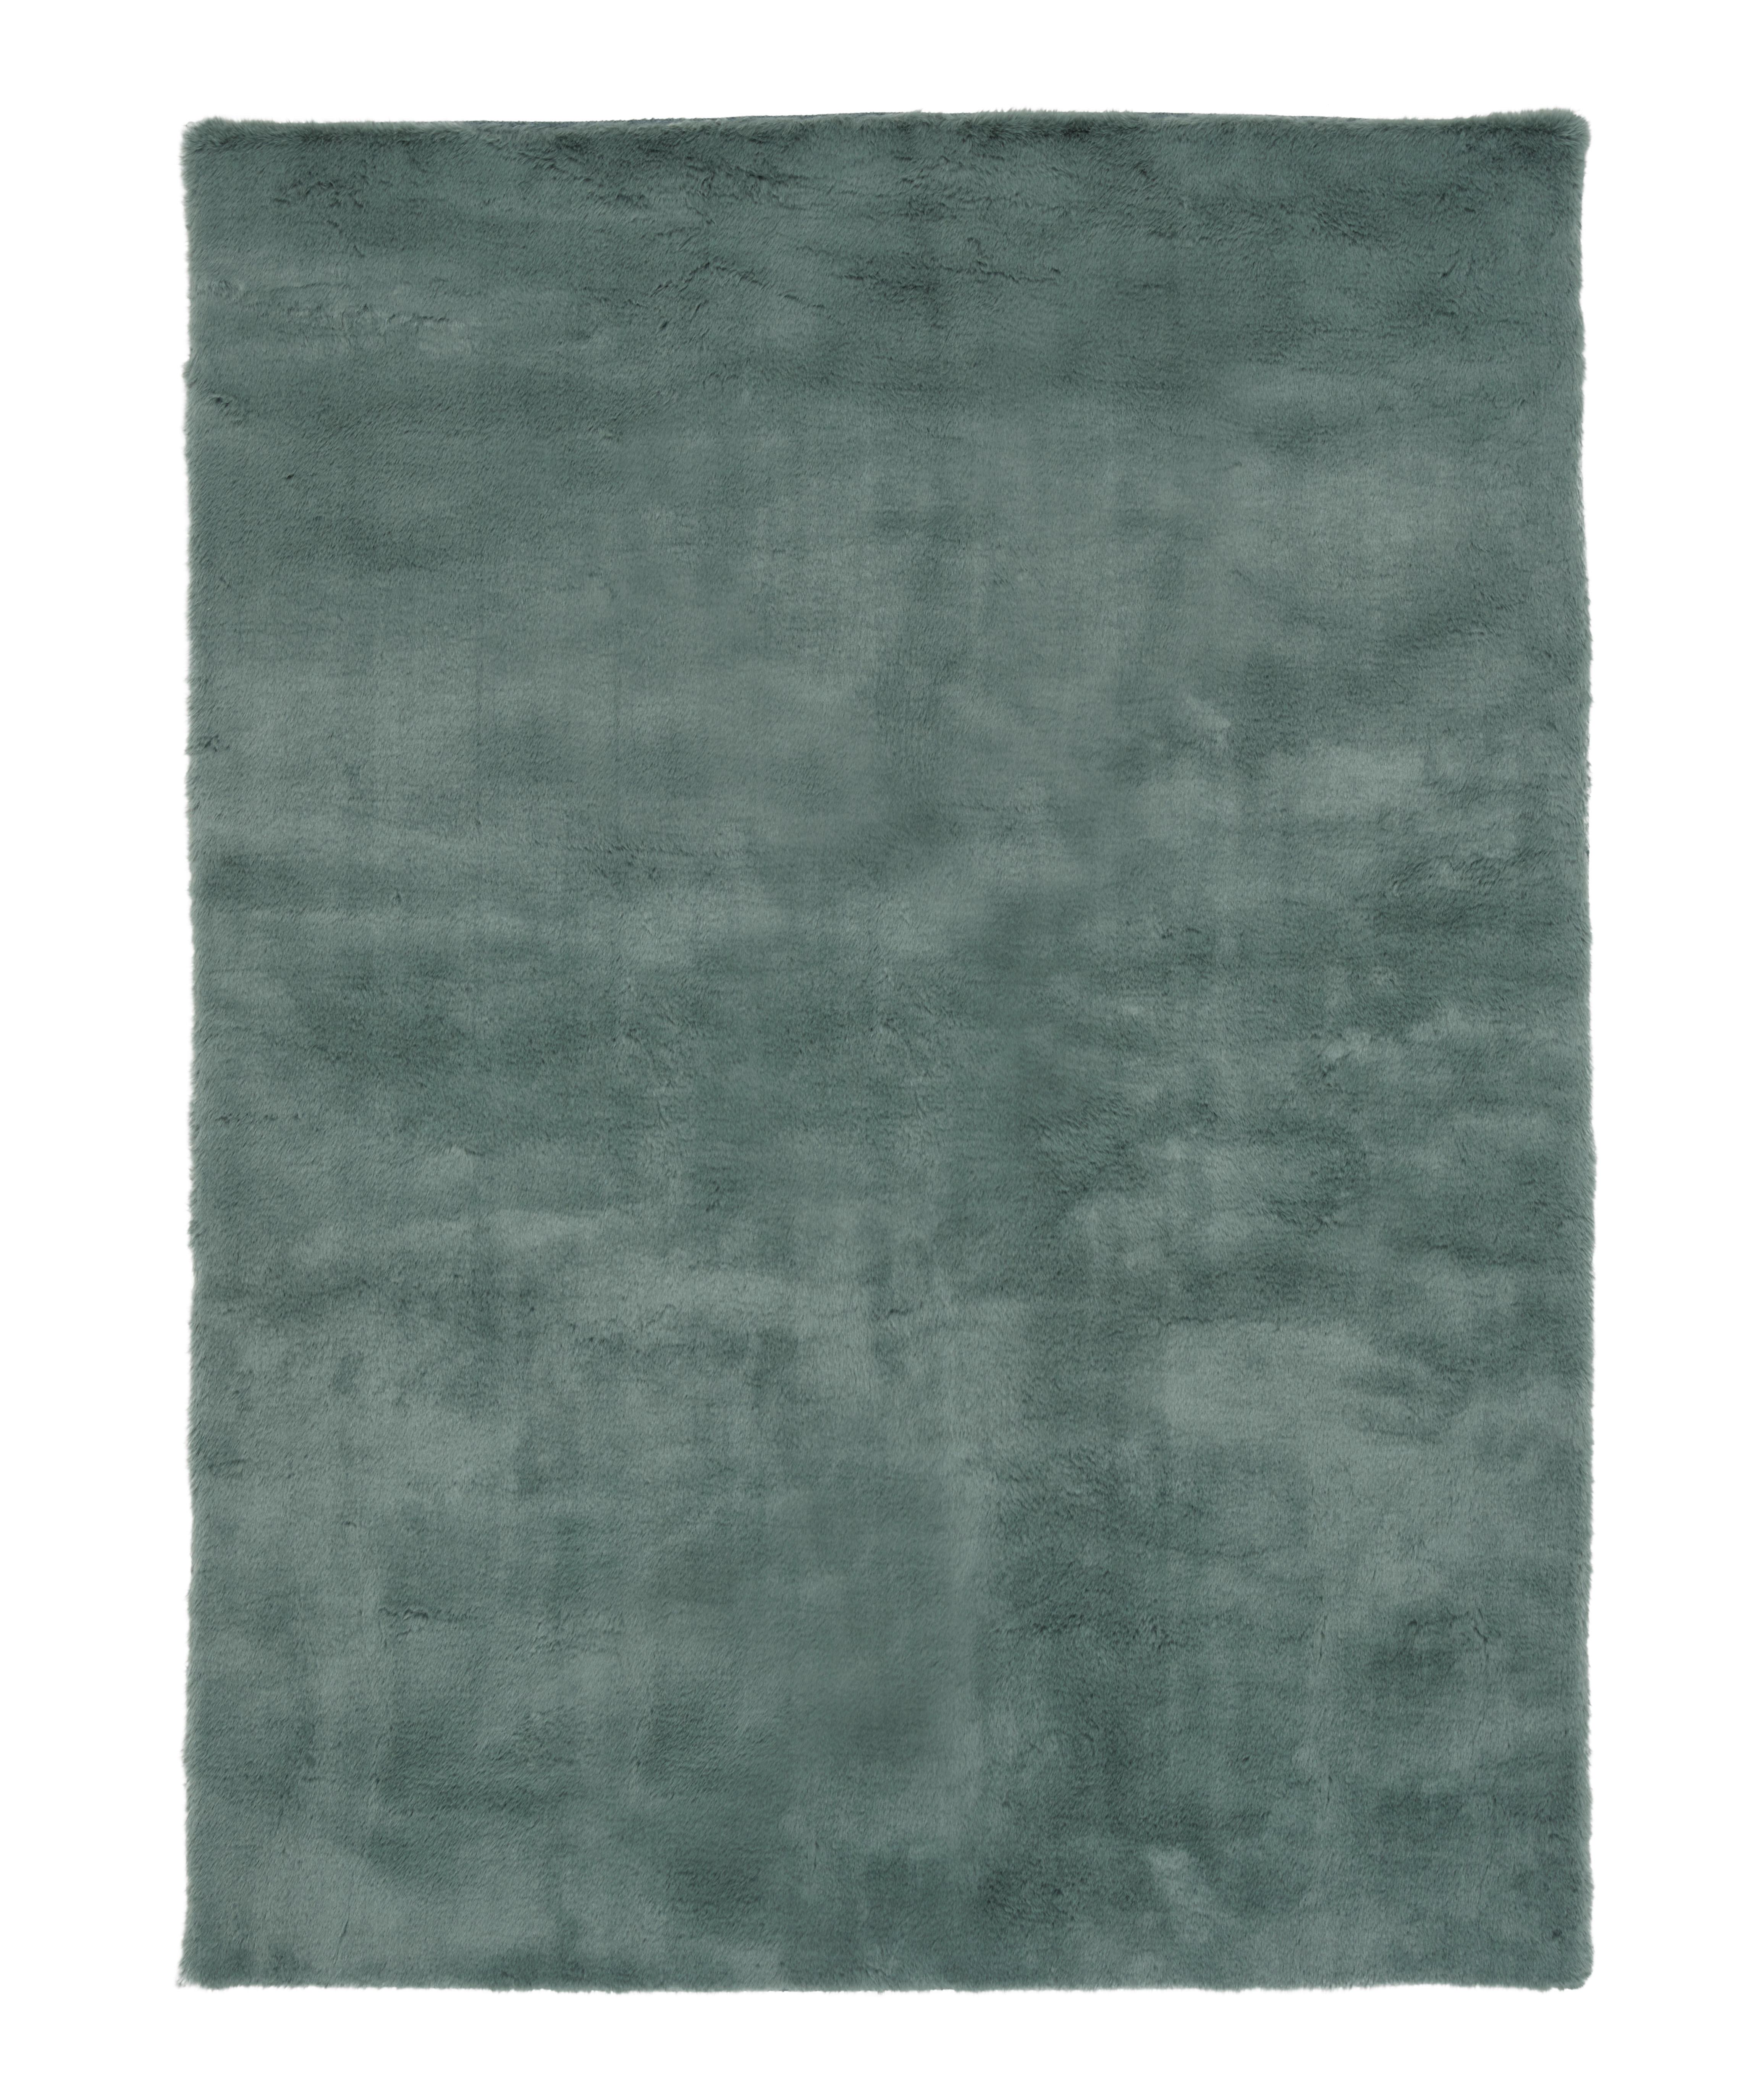 Kunstfell Caroline 1 in Grün ca.80x150cm - Grün, Textil (80/150cm) - Modern Living